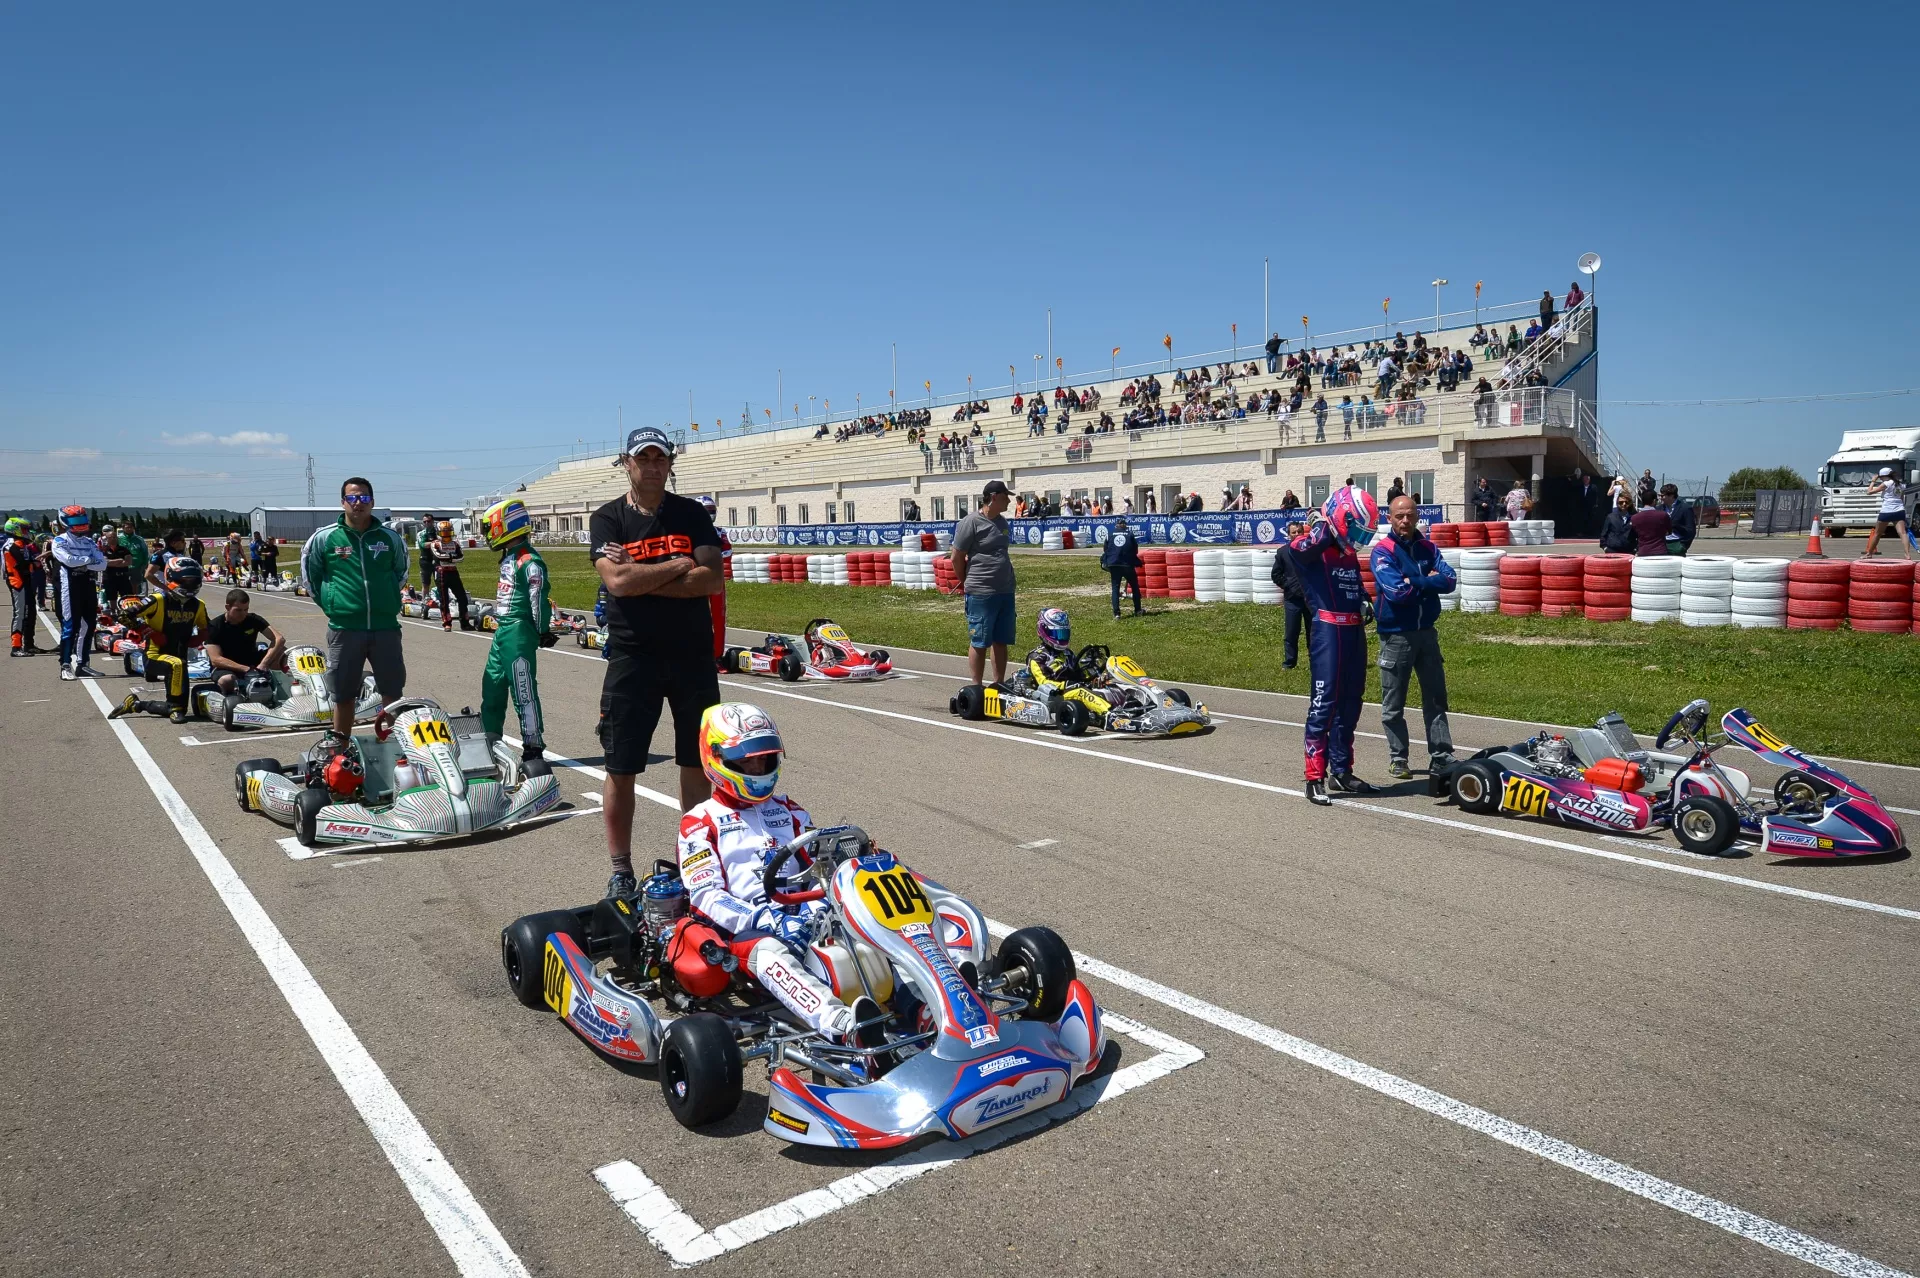 Zuera International Circuit in Spain, Europe | Karting - Rated 4.1